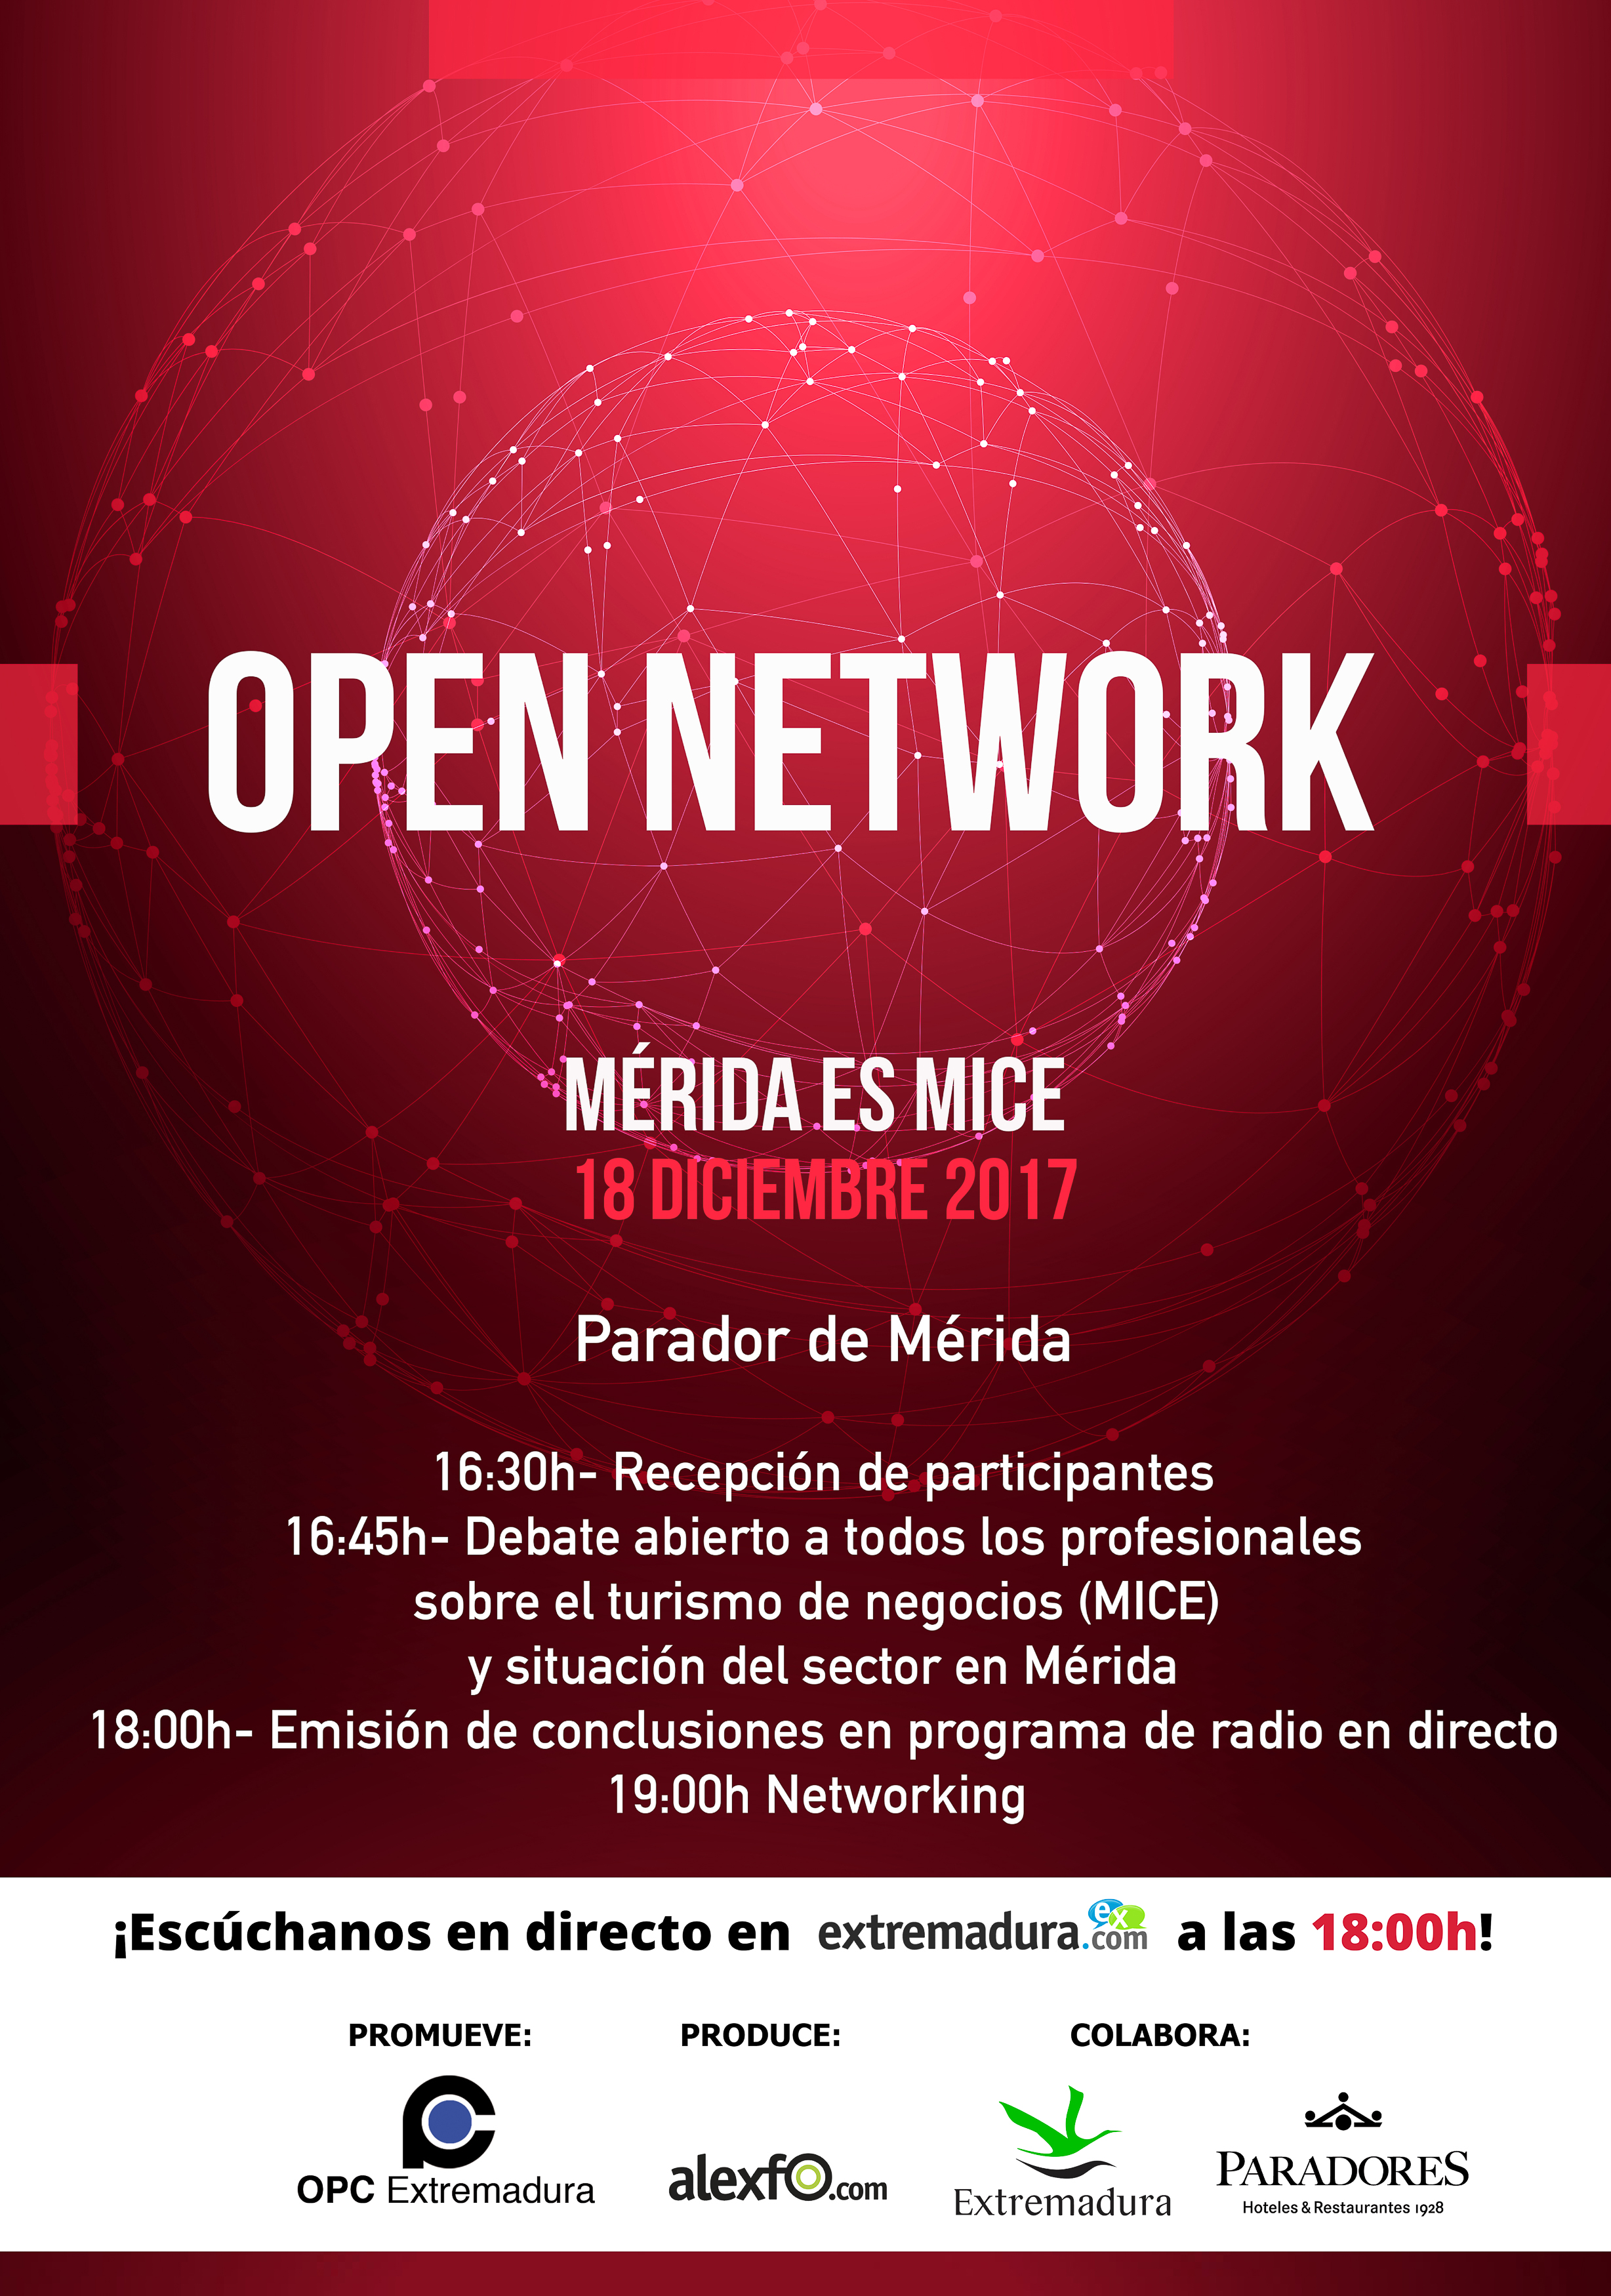 Open network merida es mice 40